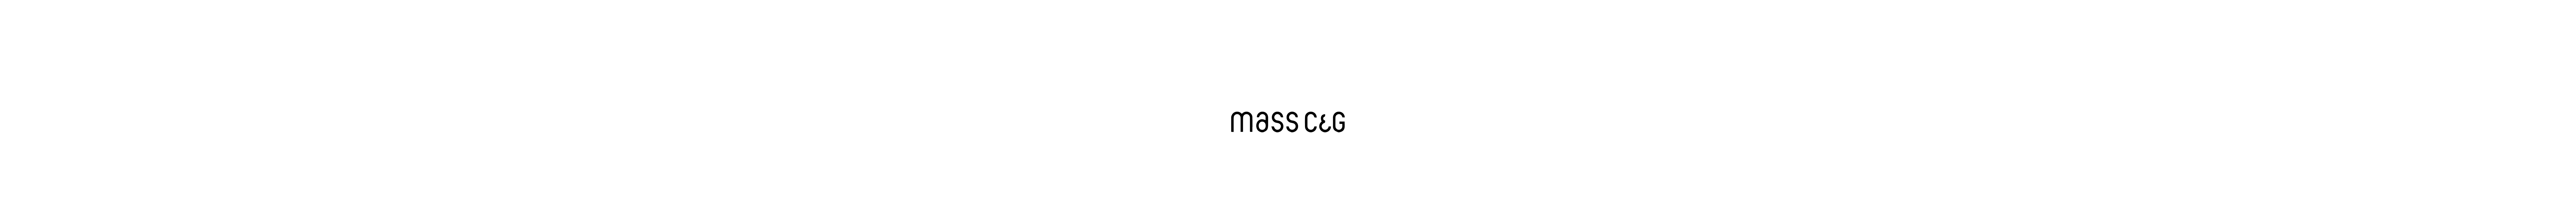 MASS C&G's profile banner